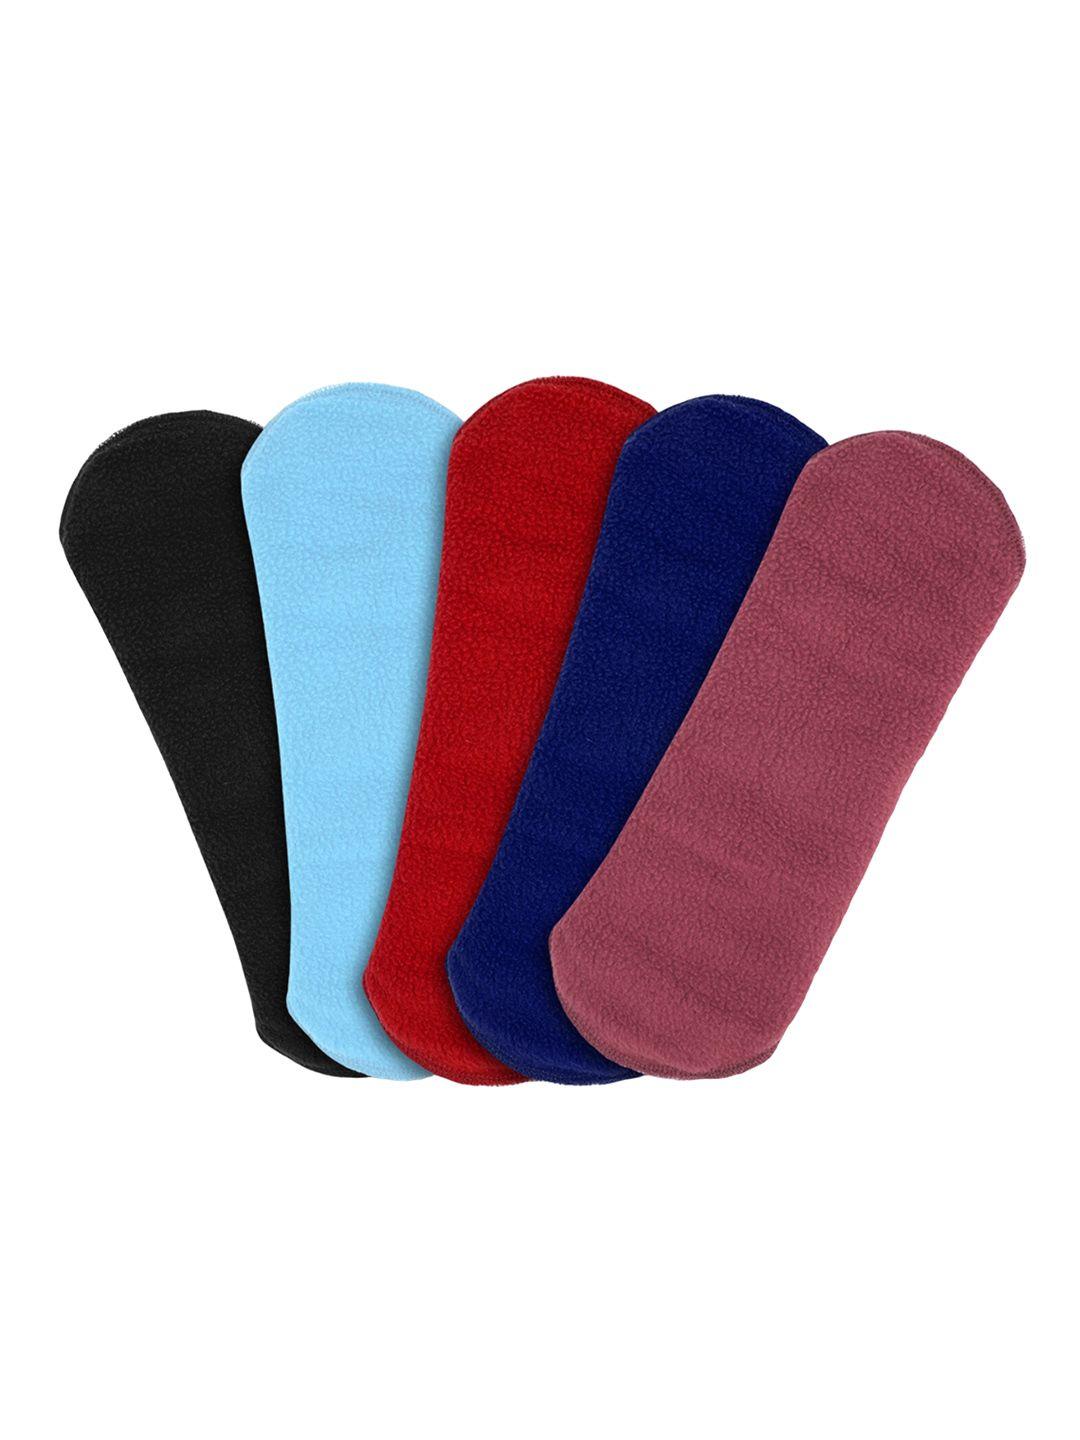 caredone set of 5 ultra thin 4-layered rash free reusable sanitary cloth pads - xl